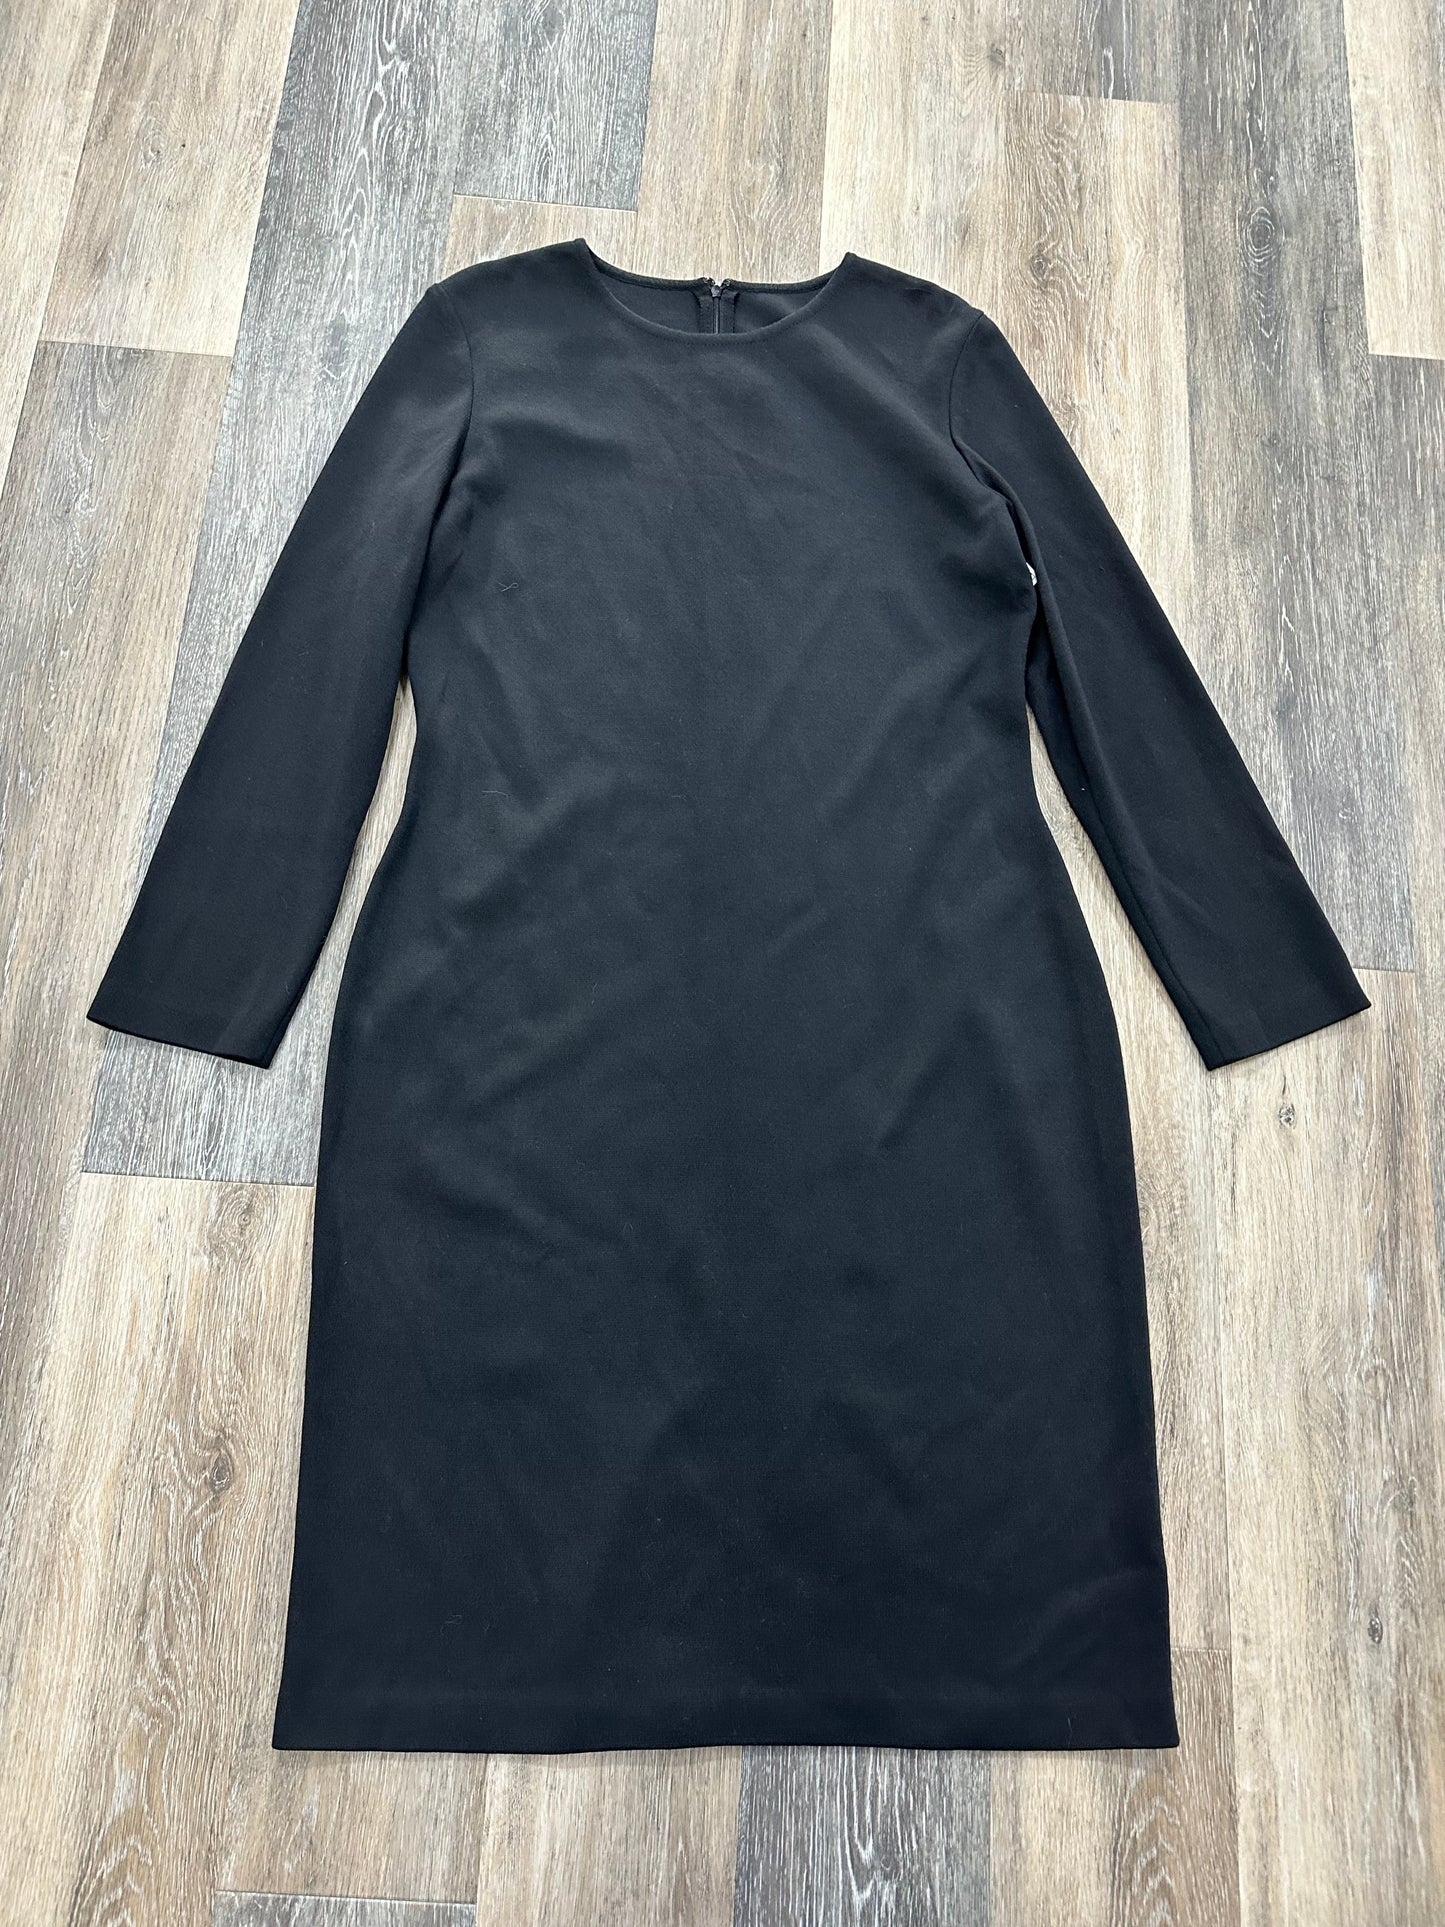 Dress Designer By St John Collection  Size: 14